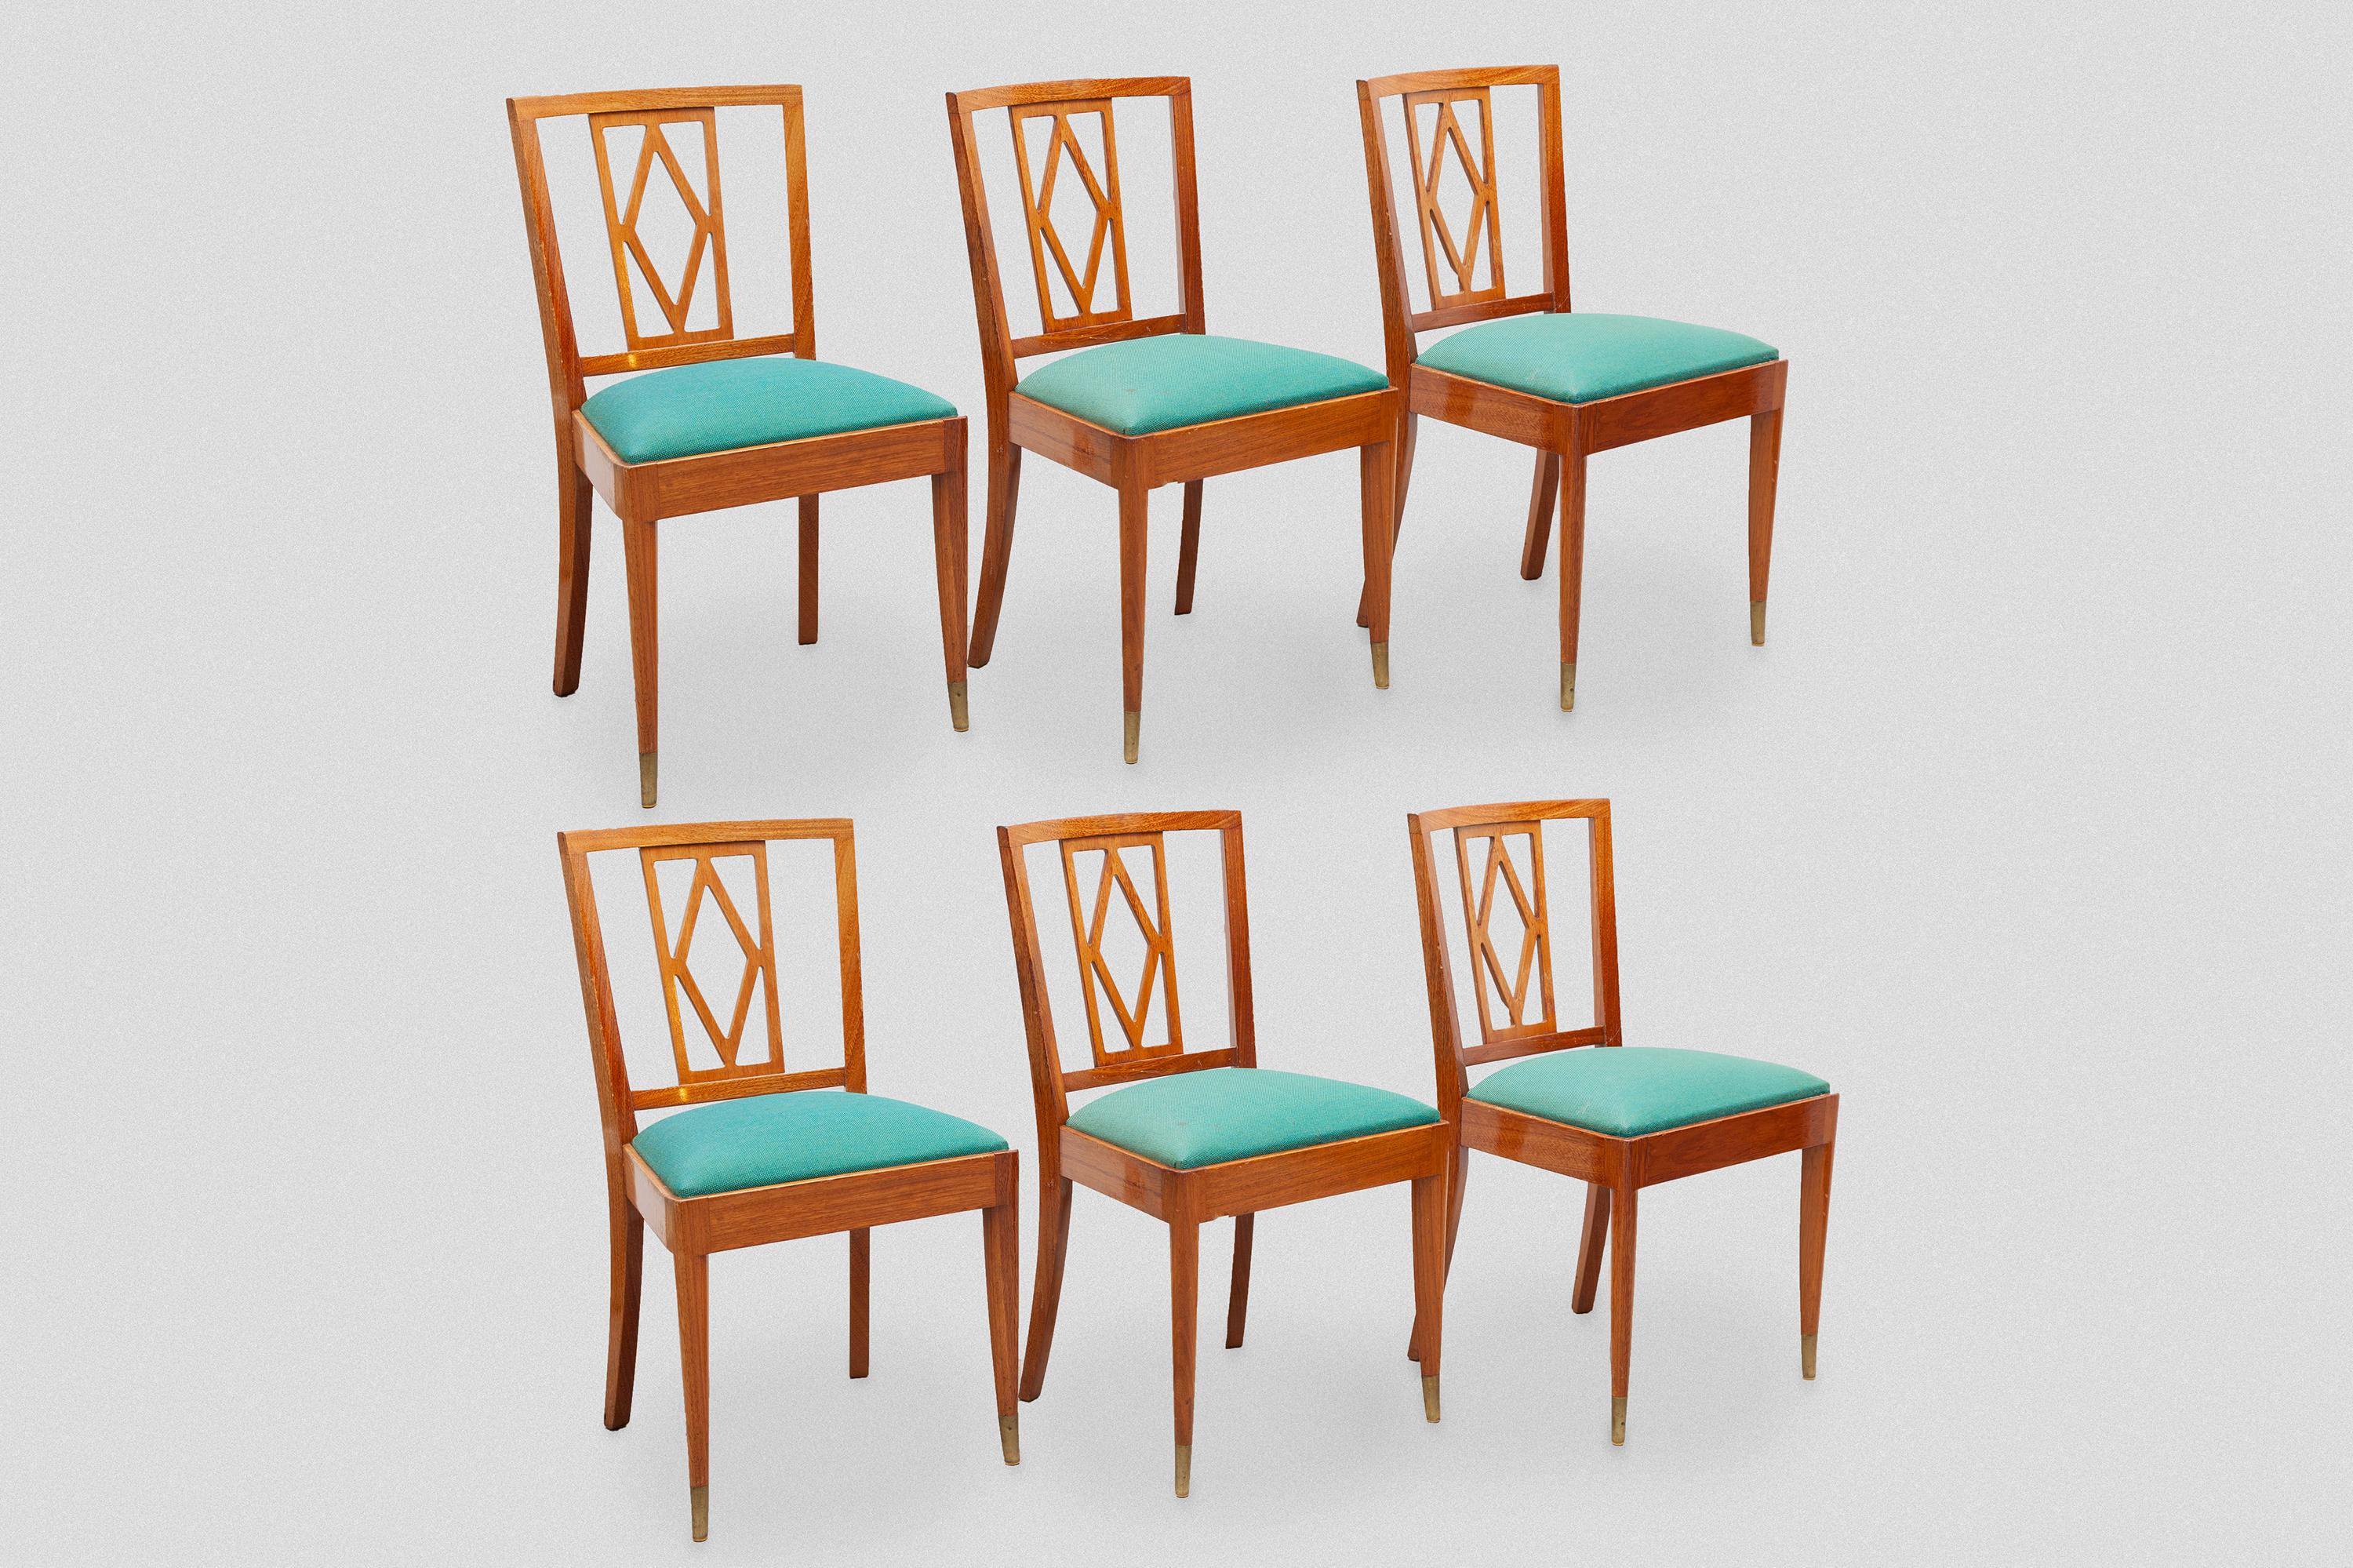 Mid-20th Century Set of Six Art Deco De Coene Dining Chairs 1940s, Belgium